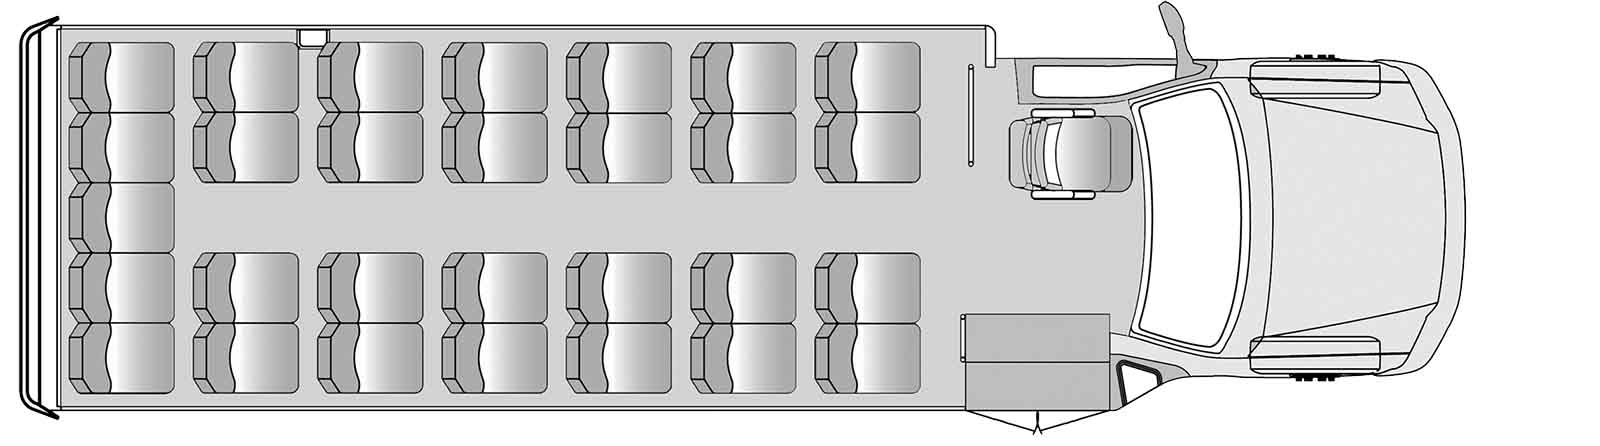 29 Passenger Plus Driver Floorplan Image